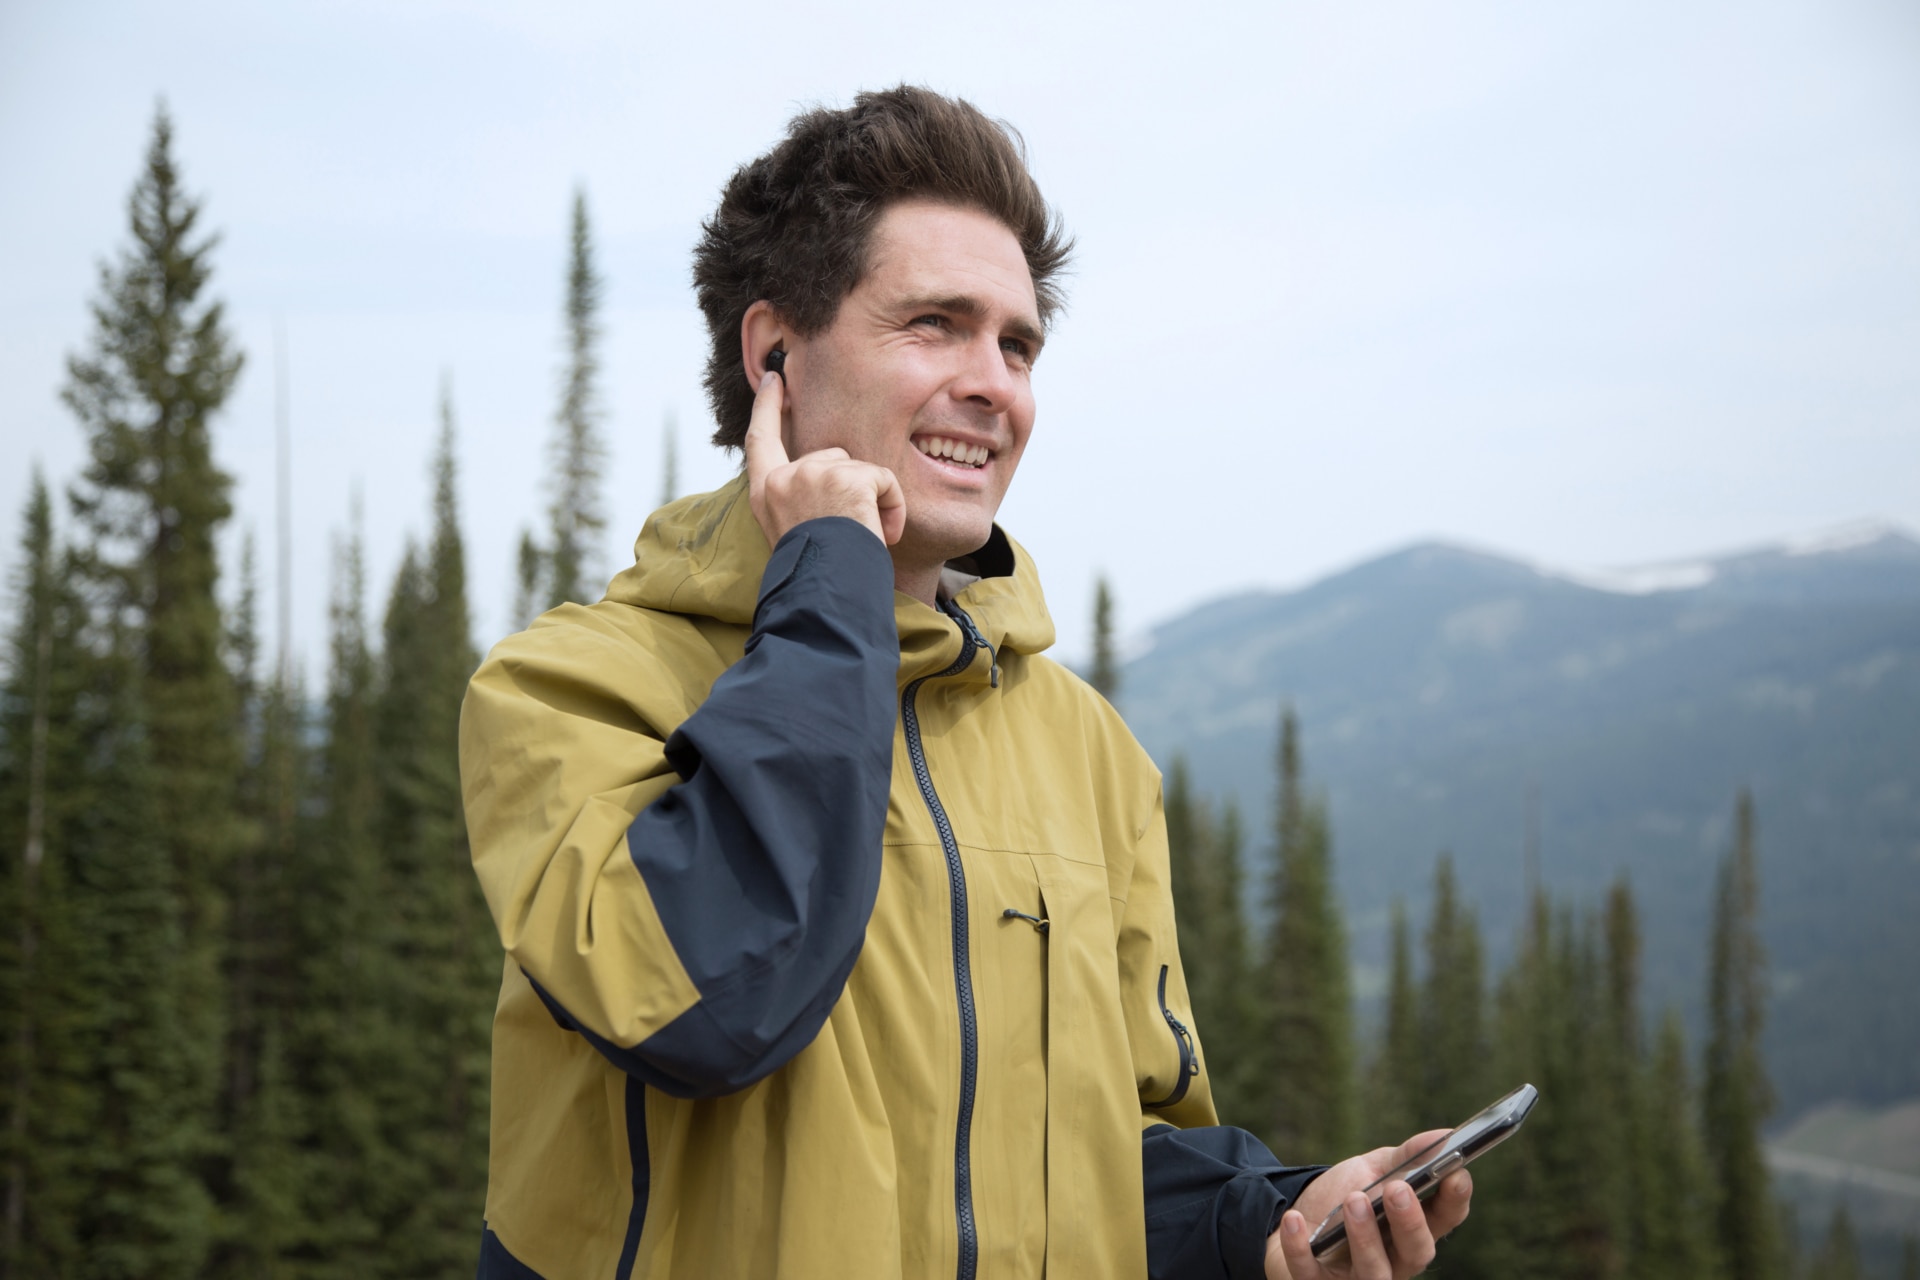 Mand med et Virto Marvel høreapparat, som holder en smartphone i hånden og fører en samtale – et bjergmotiv